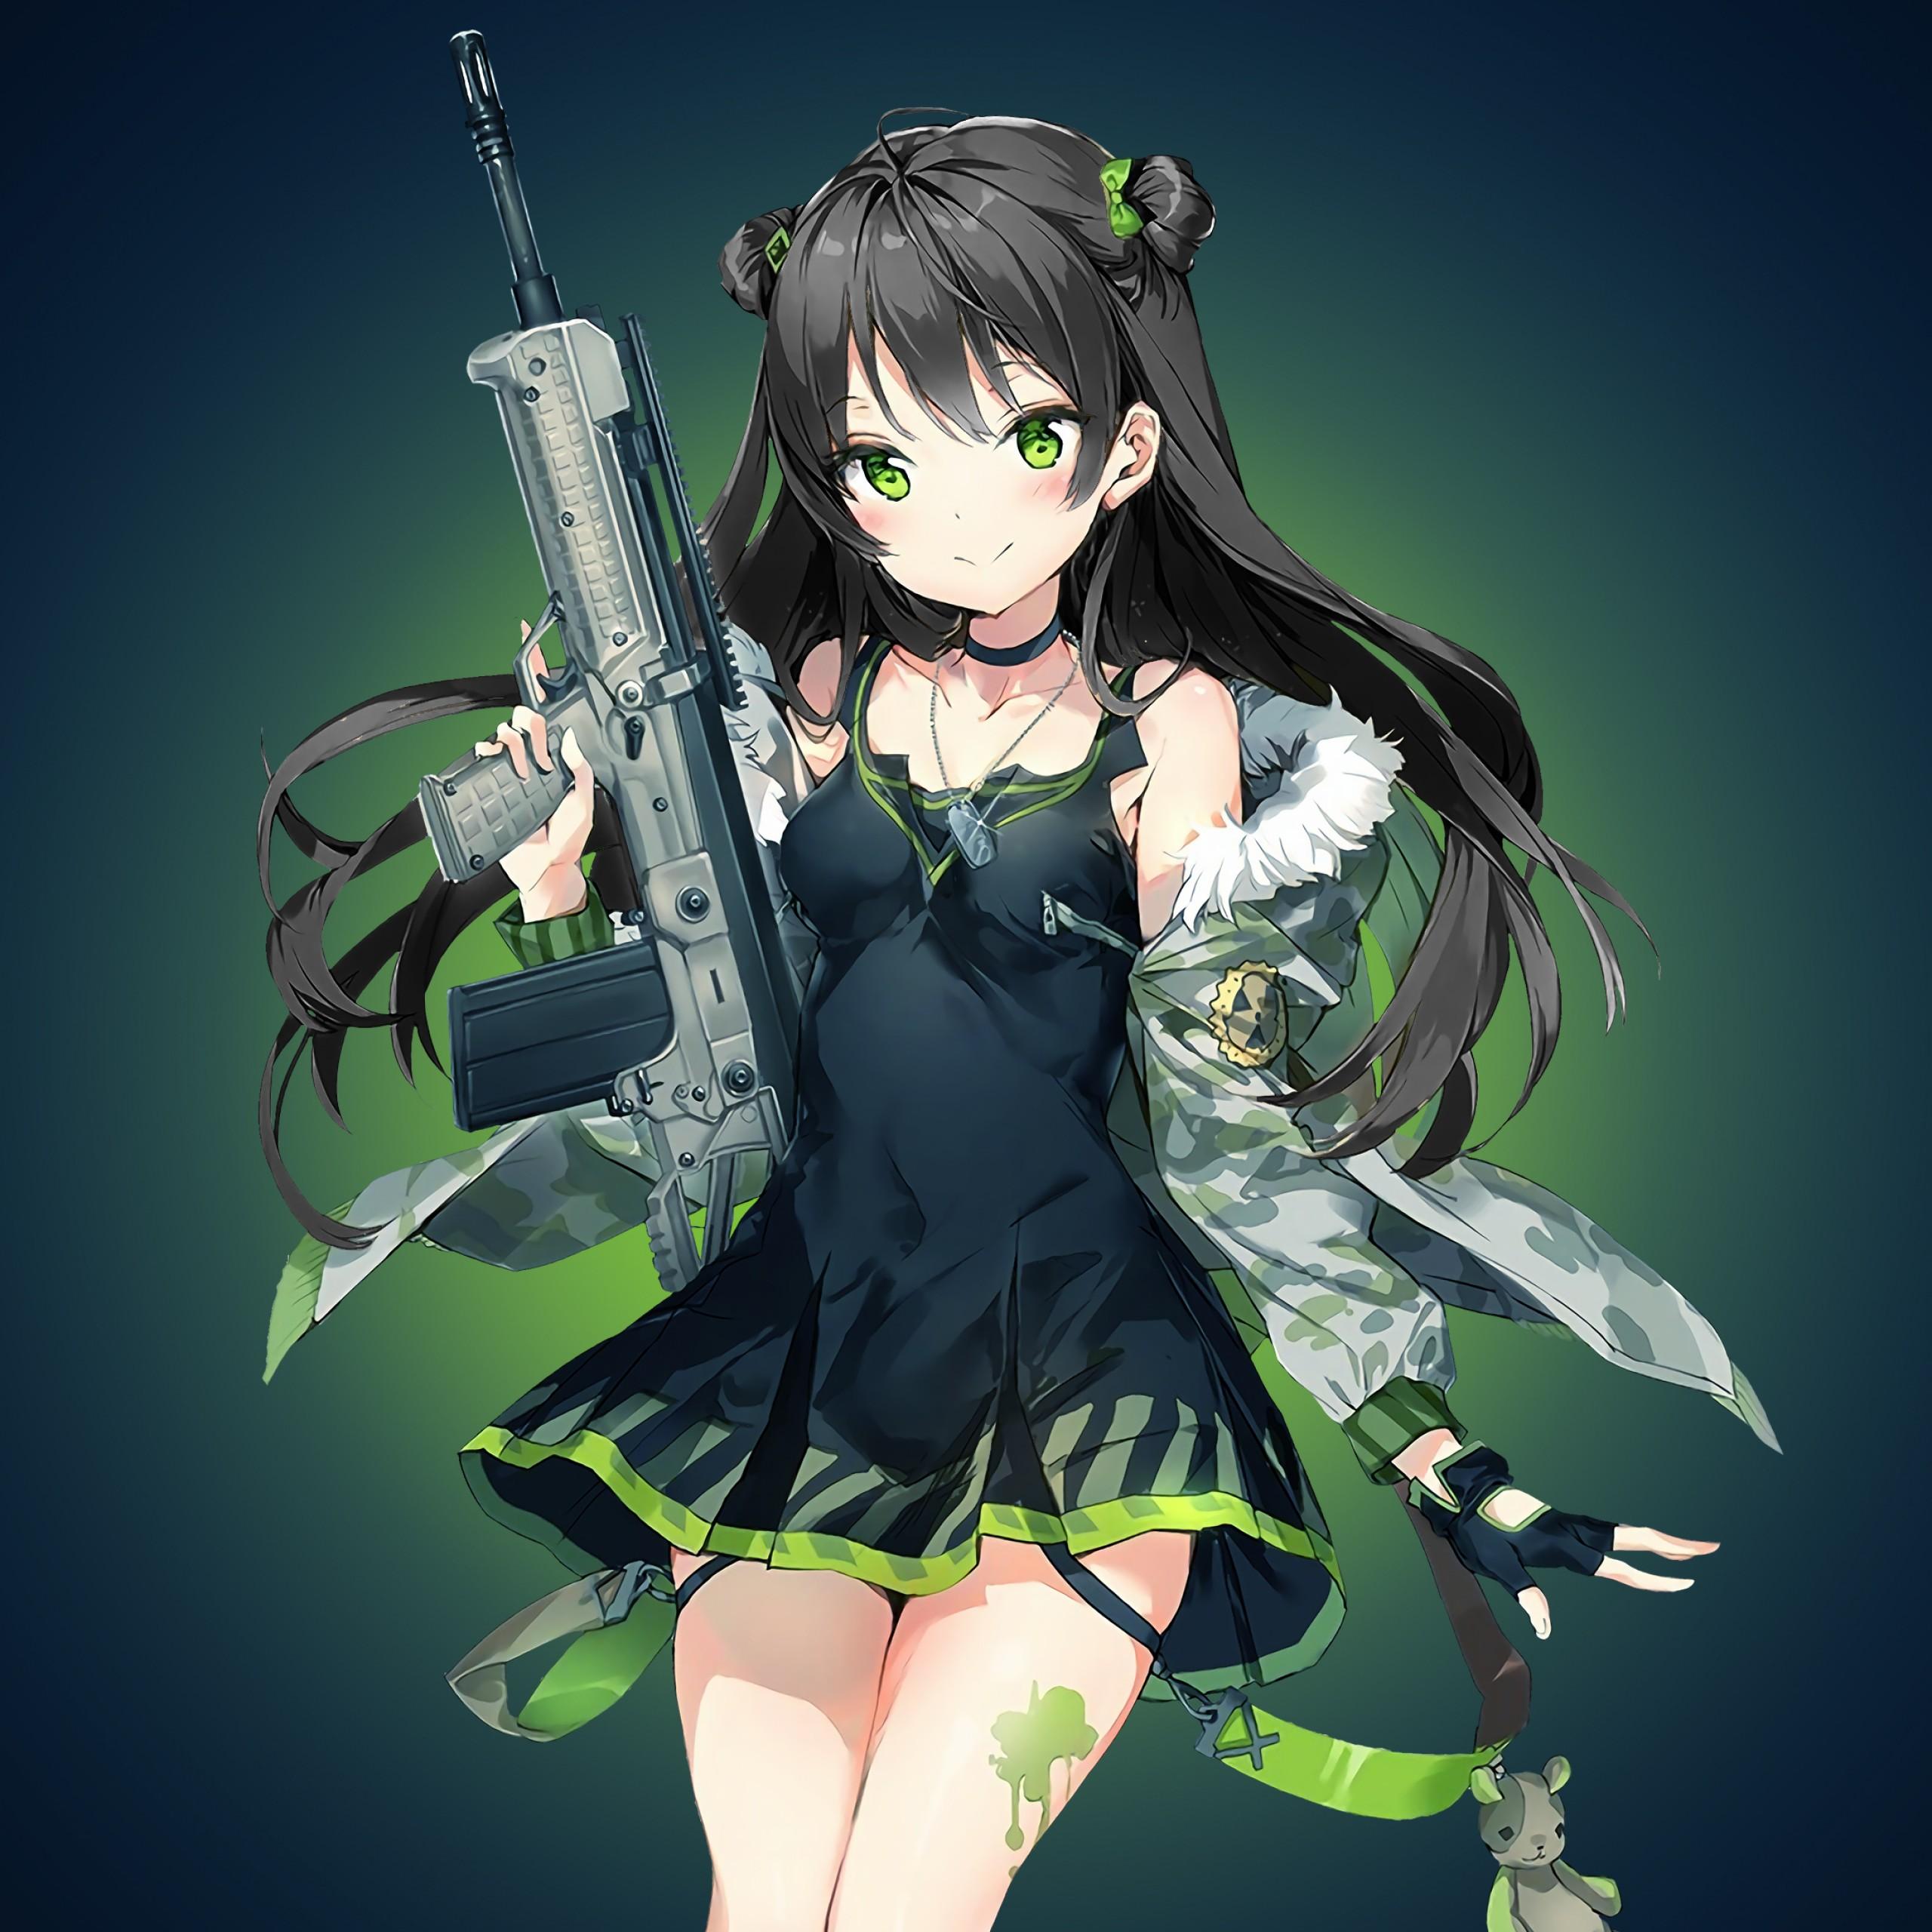 Anime / Anime Girl Wallpaper Girl With Weapon, HD